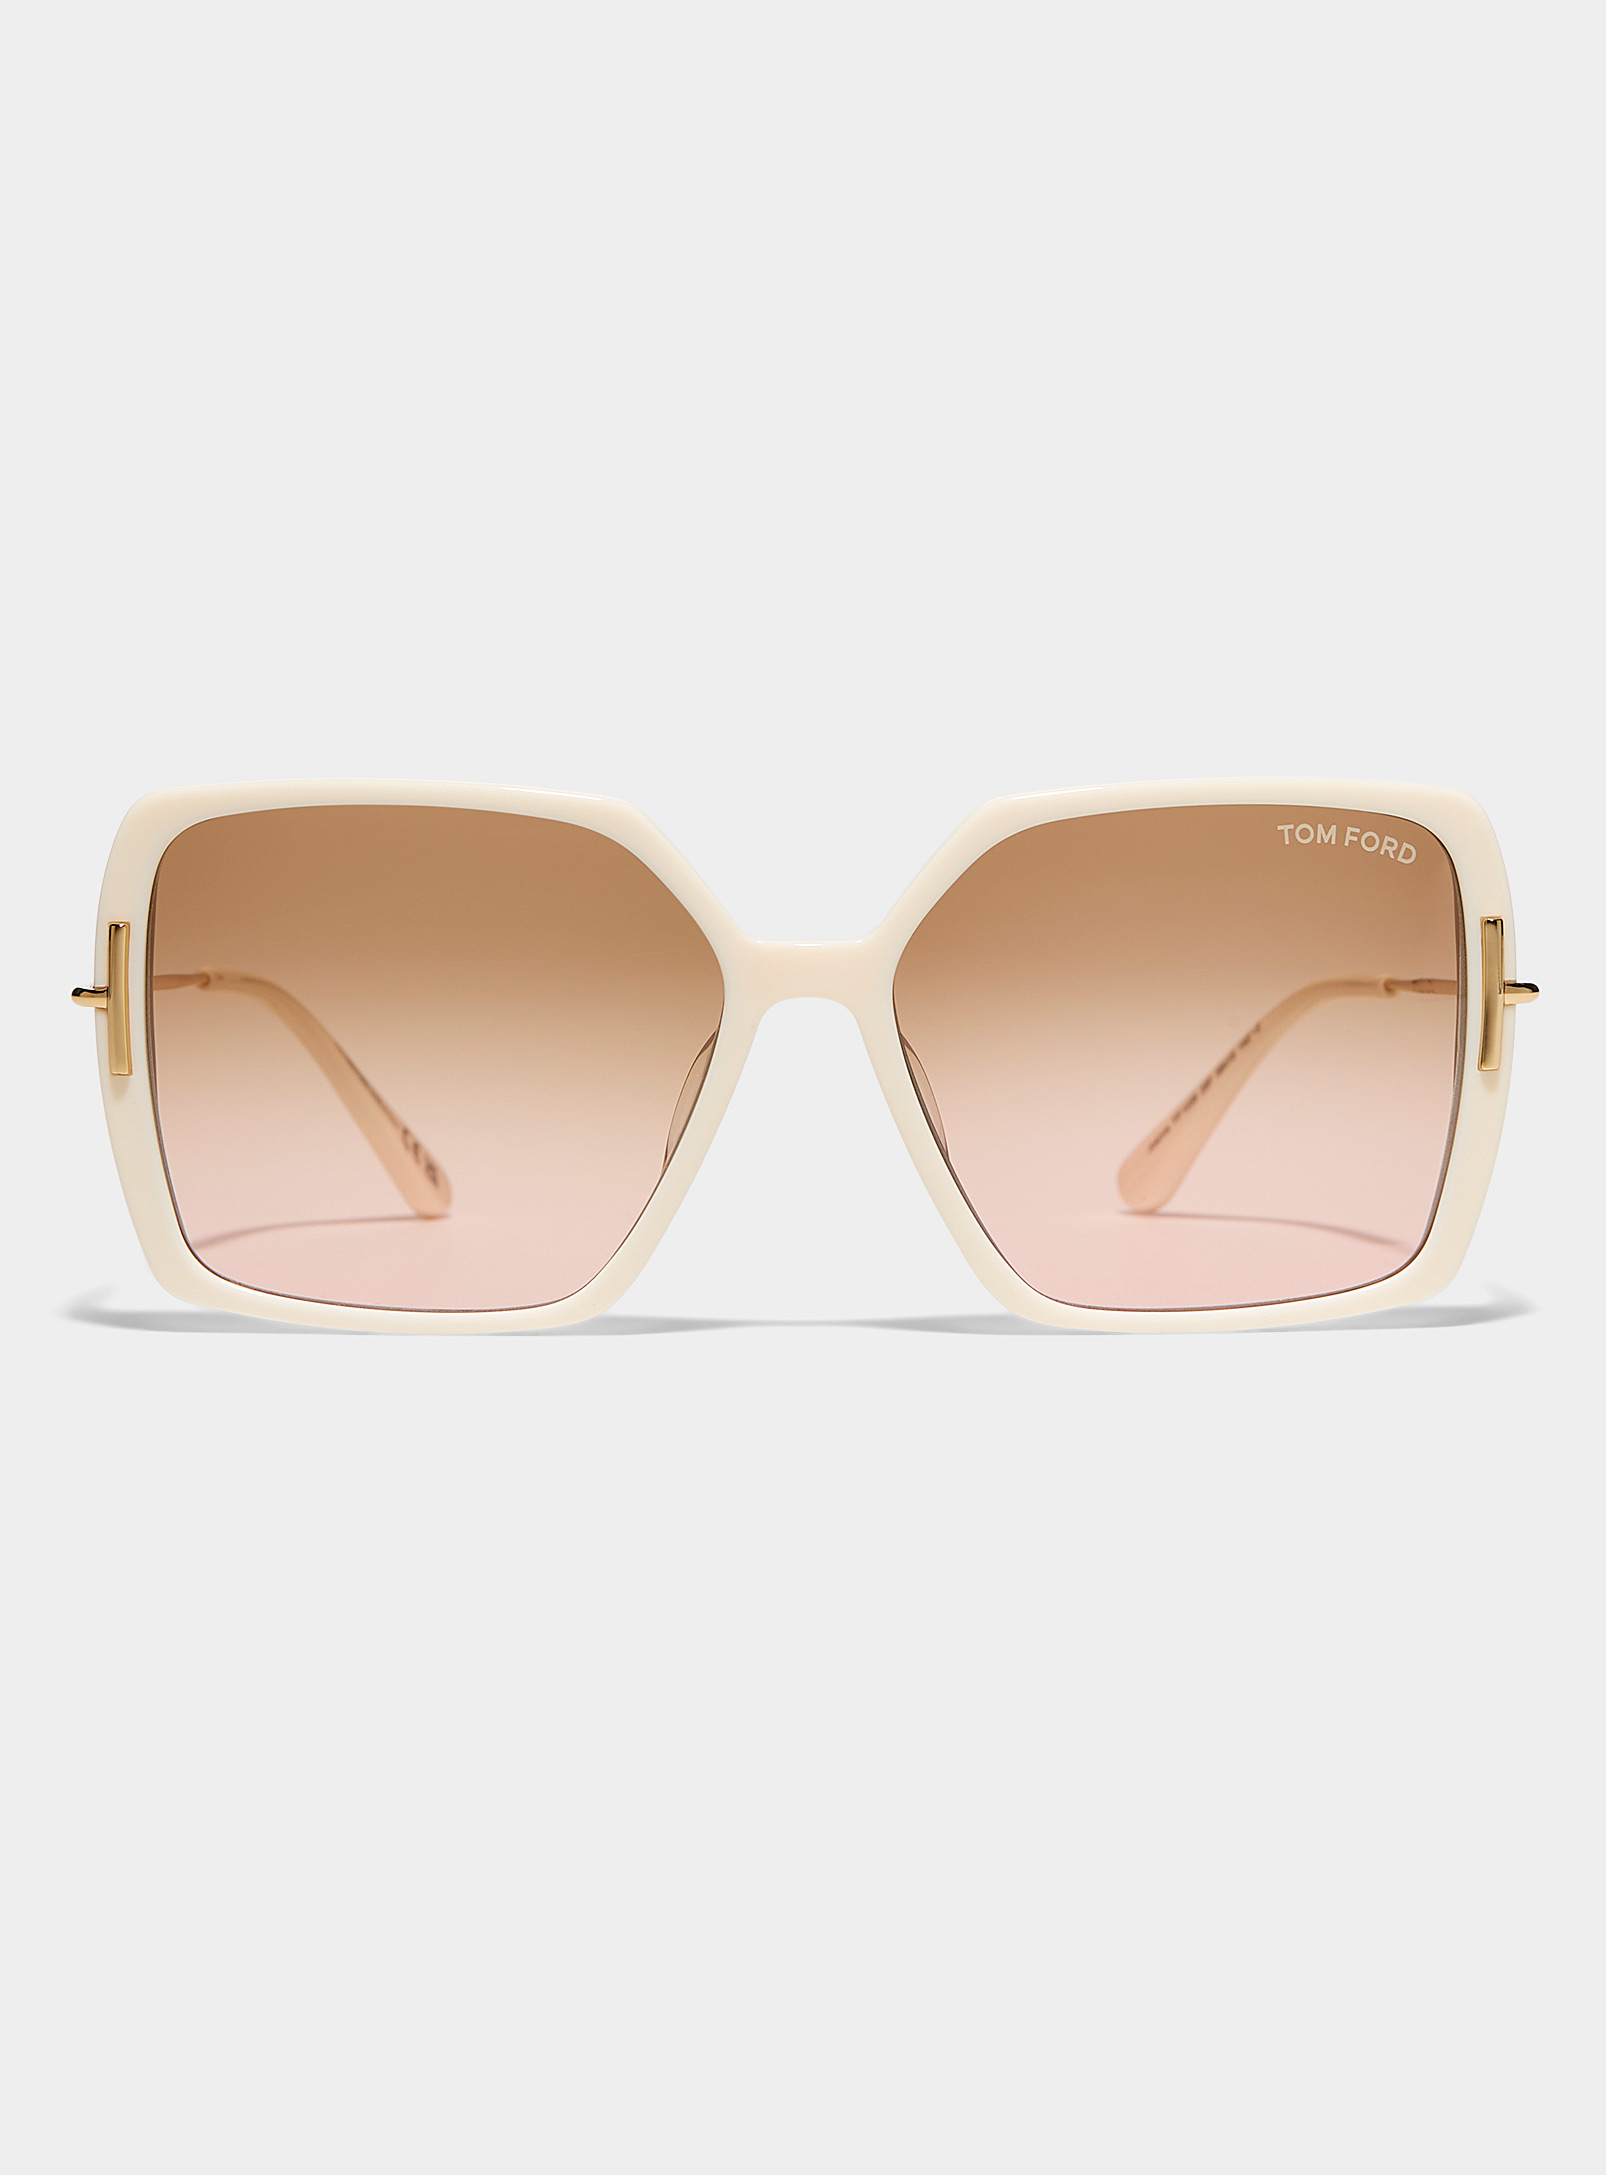 Tom Ford Joanna Square Sunglasses In Gold